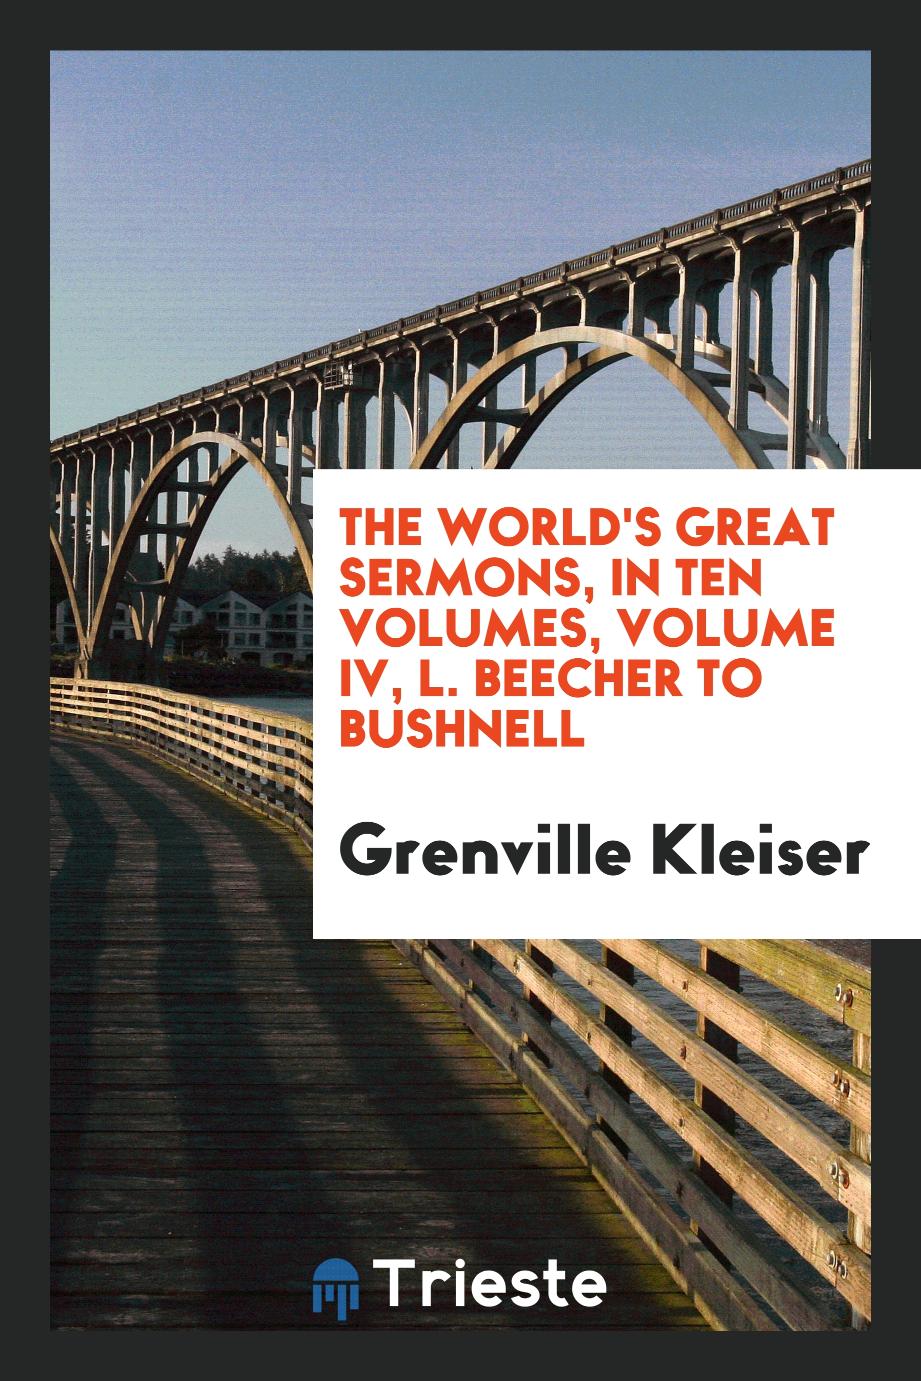 The World's Great Sermons, in Ten Volumes, Volume IV, L. Beecher to Bushnell